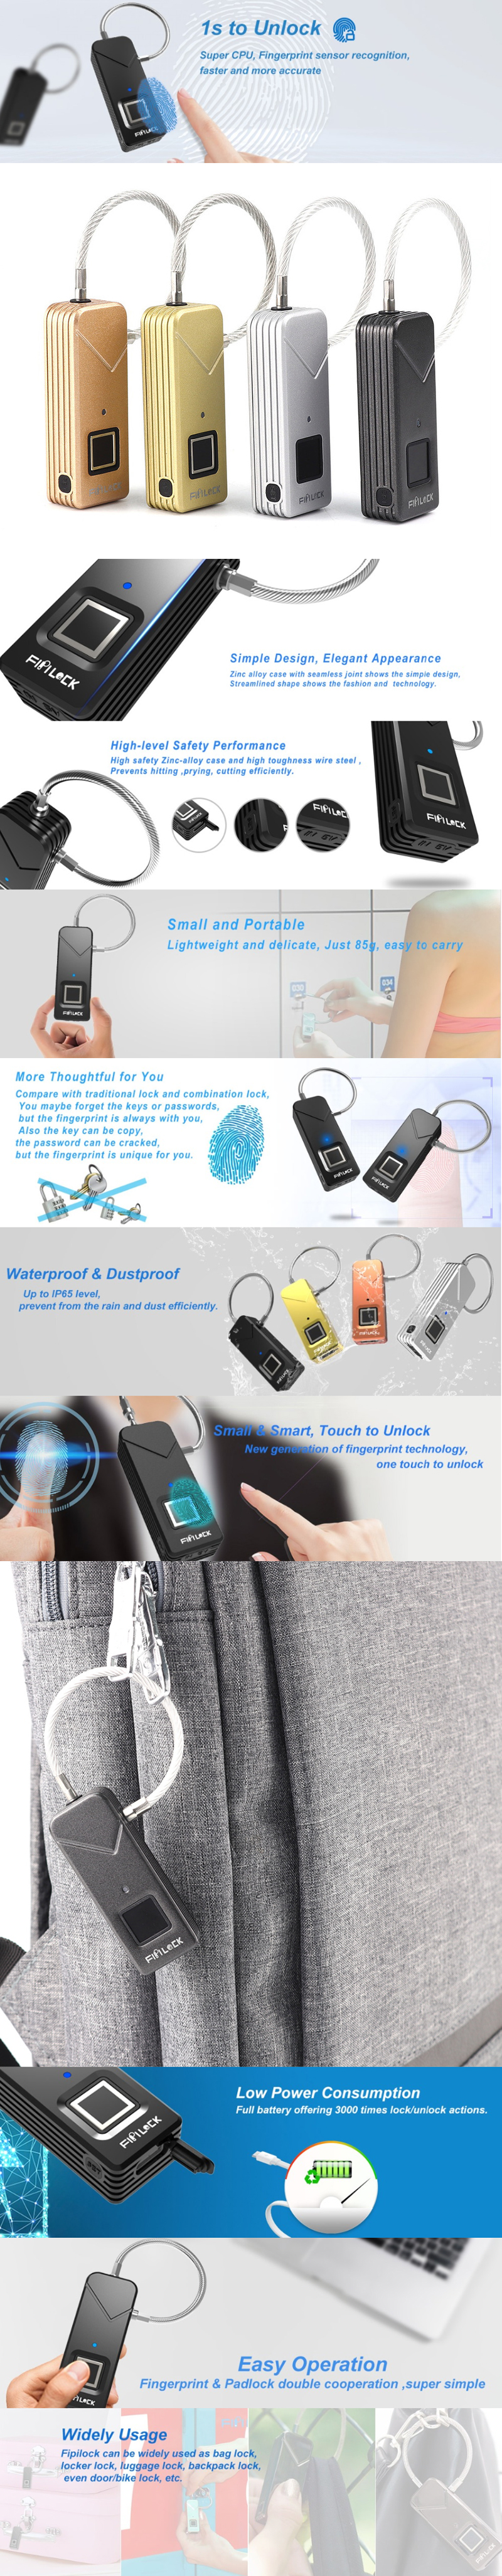 IPReereg-37V-Smart-Anti-theft-USB-Fingerprint-Lock-IP65-Waterproof-Travel-Suitcase-Luggage-Bag-Safet-1521851-1